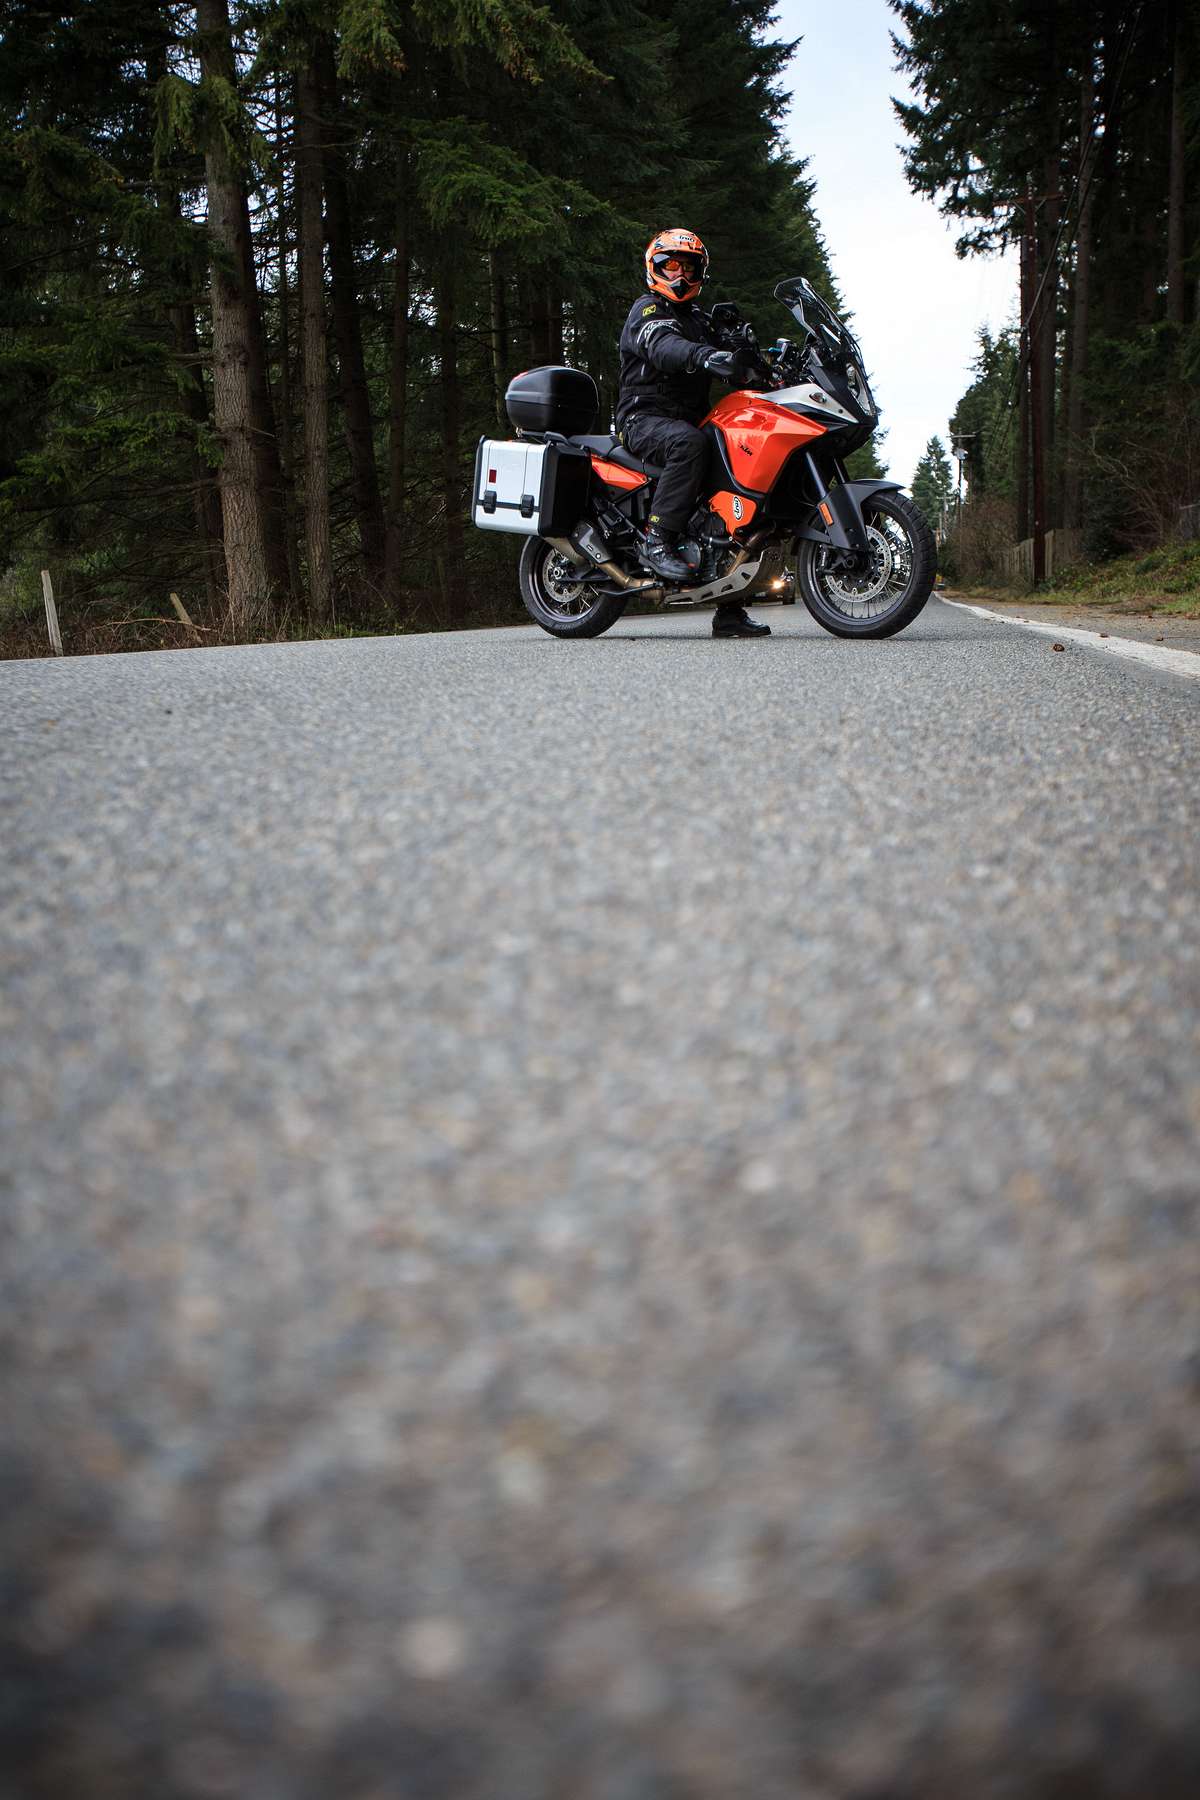 001-editorial-magazine-portraits-motorcyclist.jpg